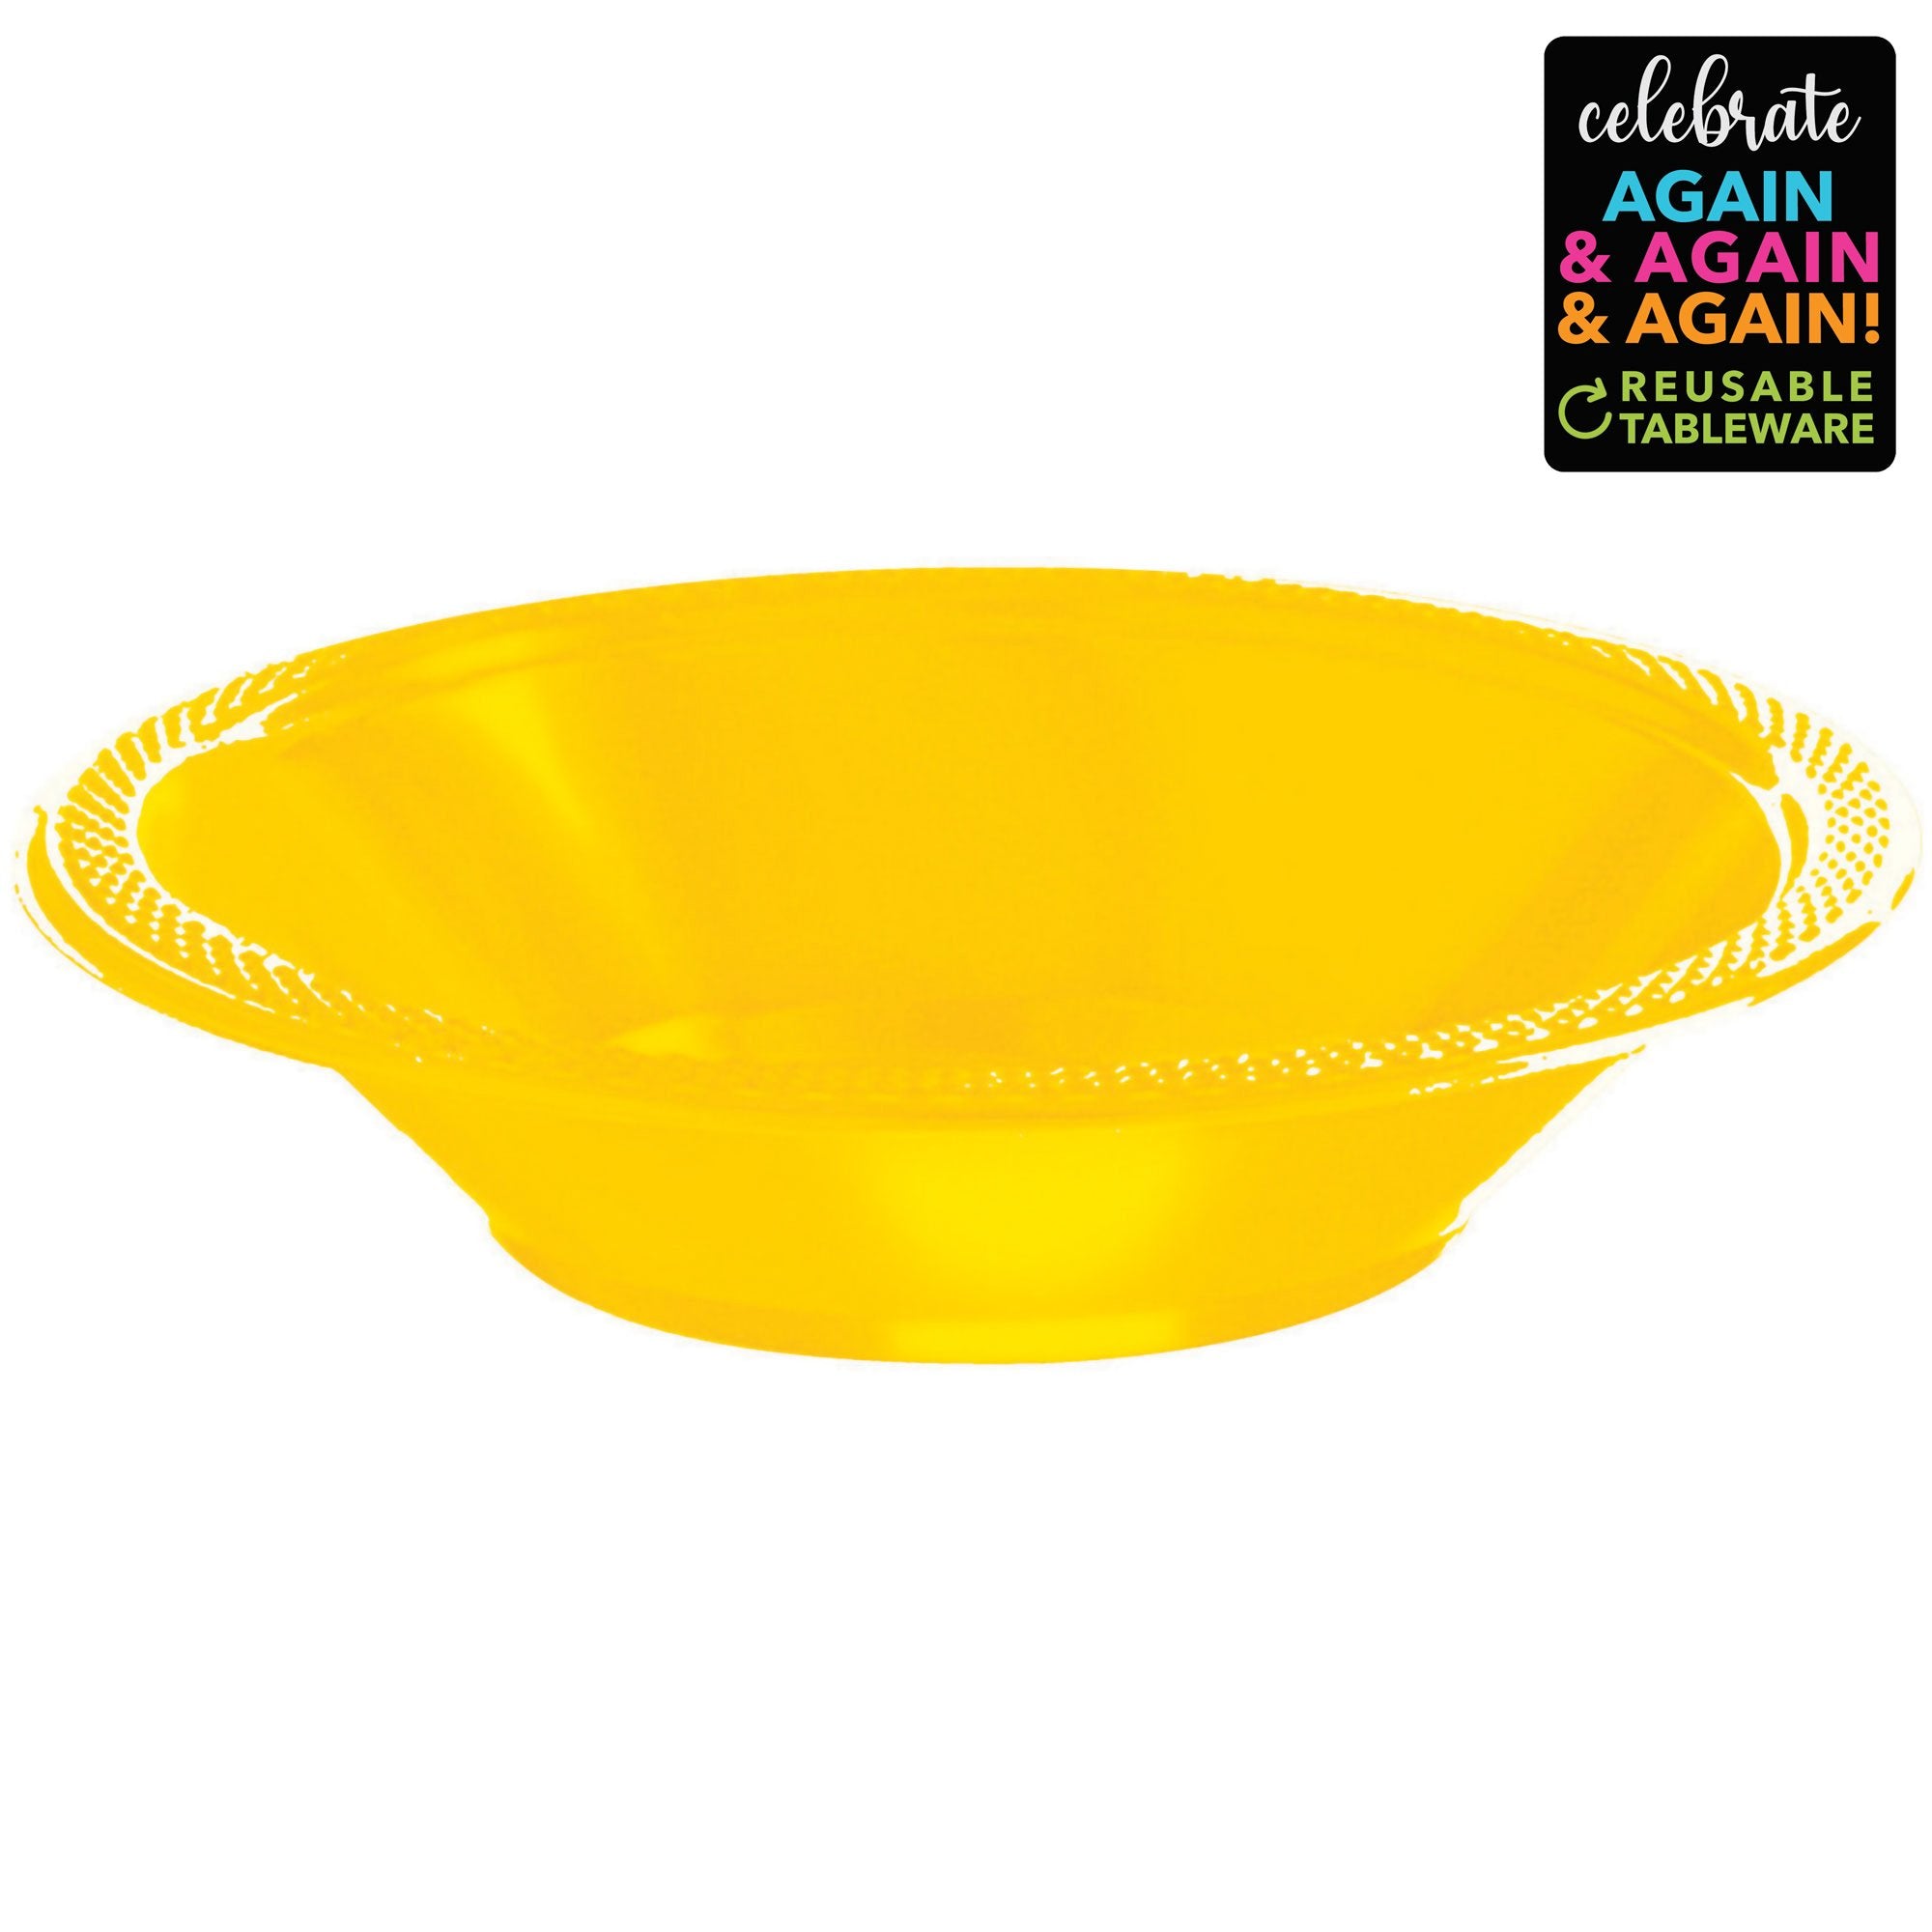 Bowls 18cm Sun Yellow Plast Pk20- Discontinued Line Last Chance To Buy